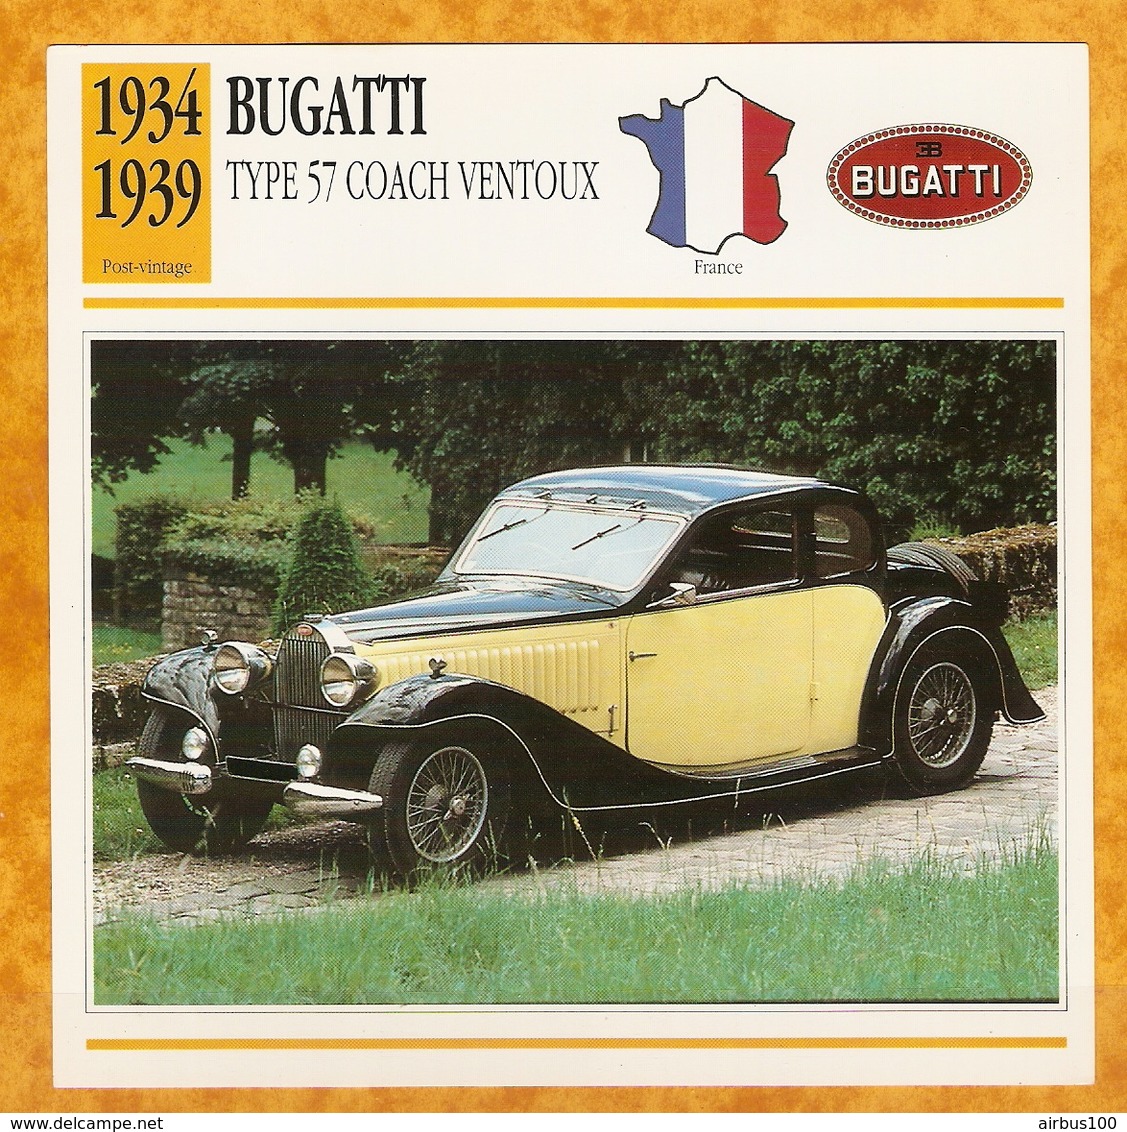 1934 FRANCE VIEILLE VOITURE BUGATTI TYPE 57 COACH VENTOUX - FRANCE OLD CAR - FRANCIA VIEJO COCHE - VECCHIA MACCHINA - Coches